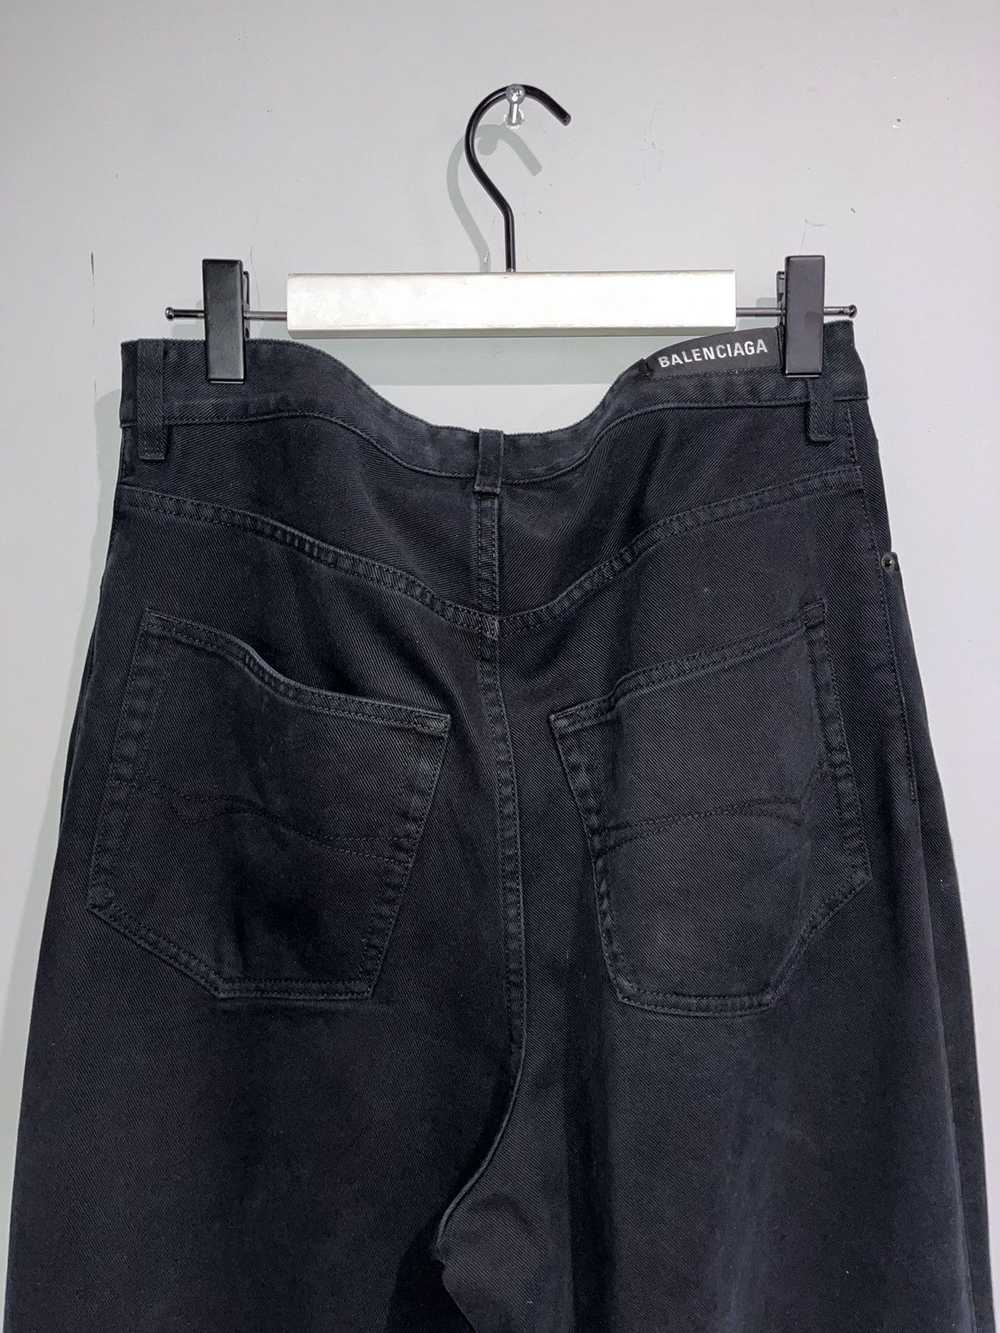 Balenciaga Baggy Pants in black soft left hand de… - image 4